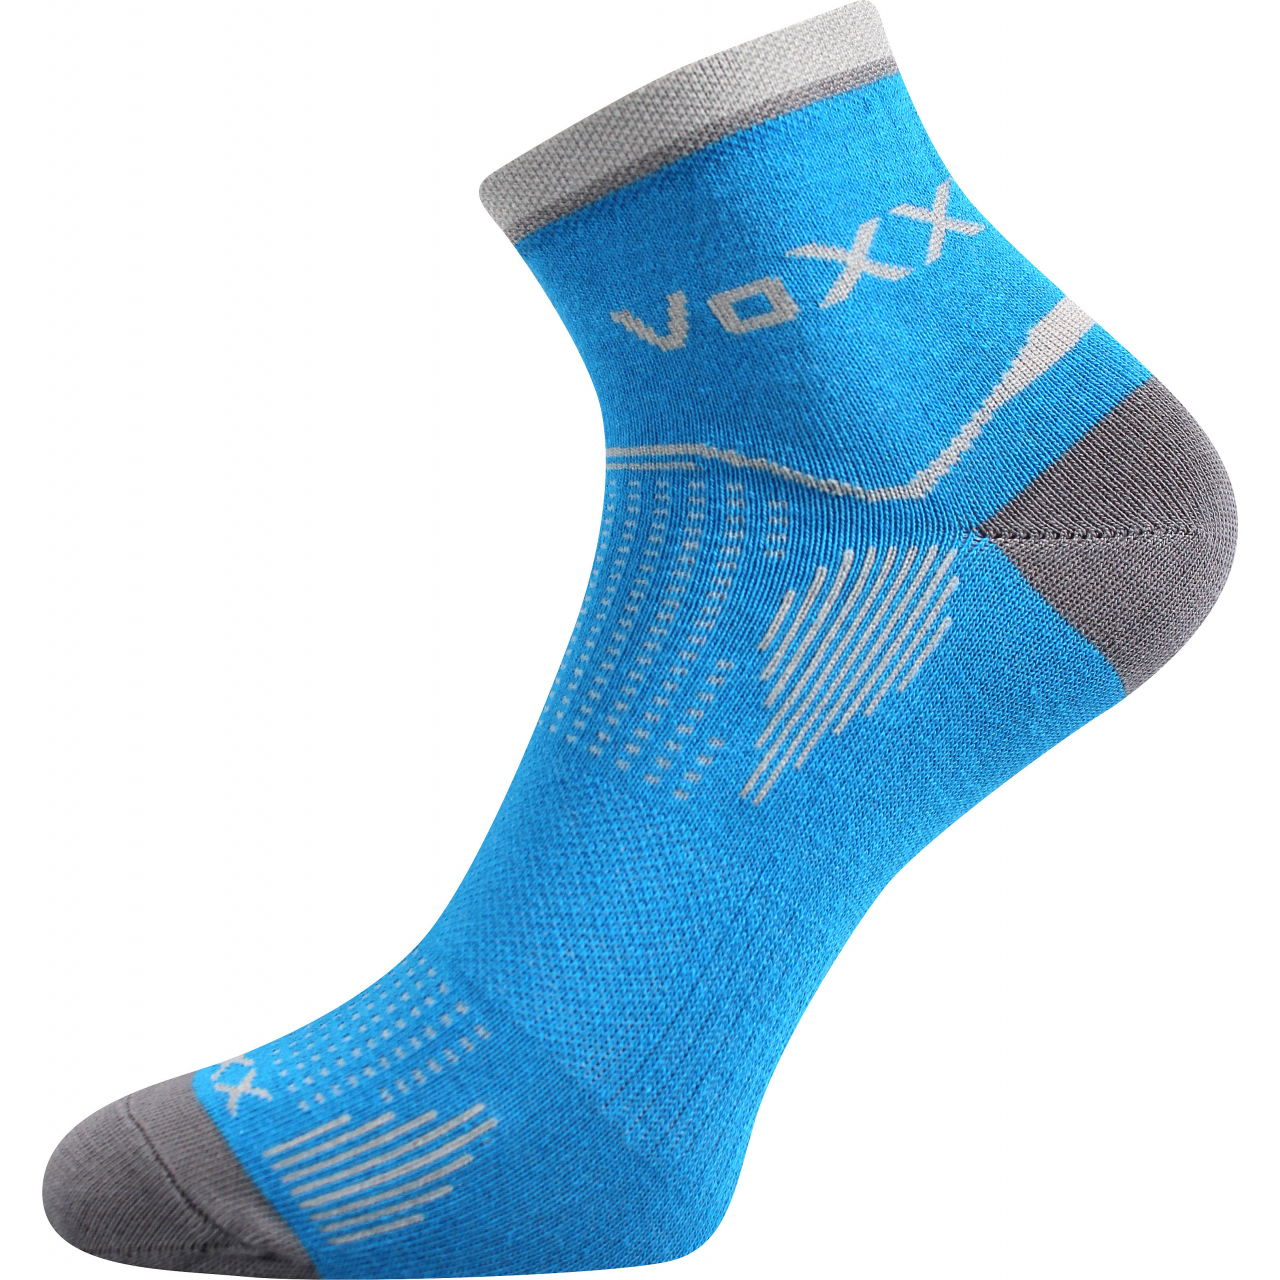 Ponožky unisex sportovní Voxx Sirius - modré, 39-42